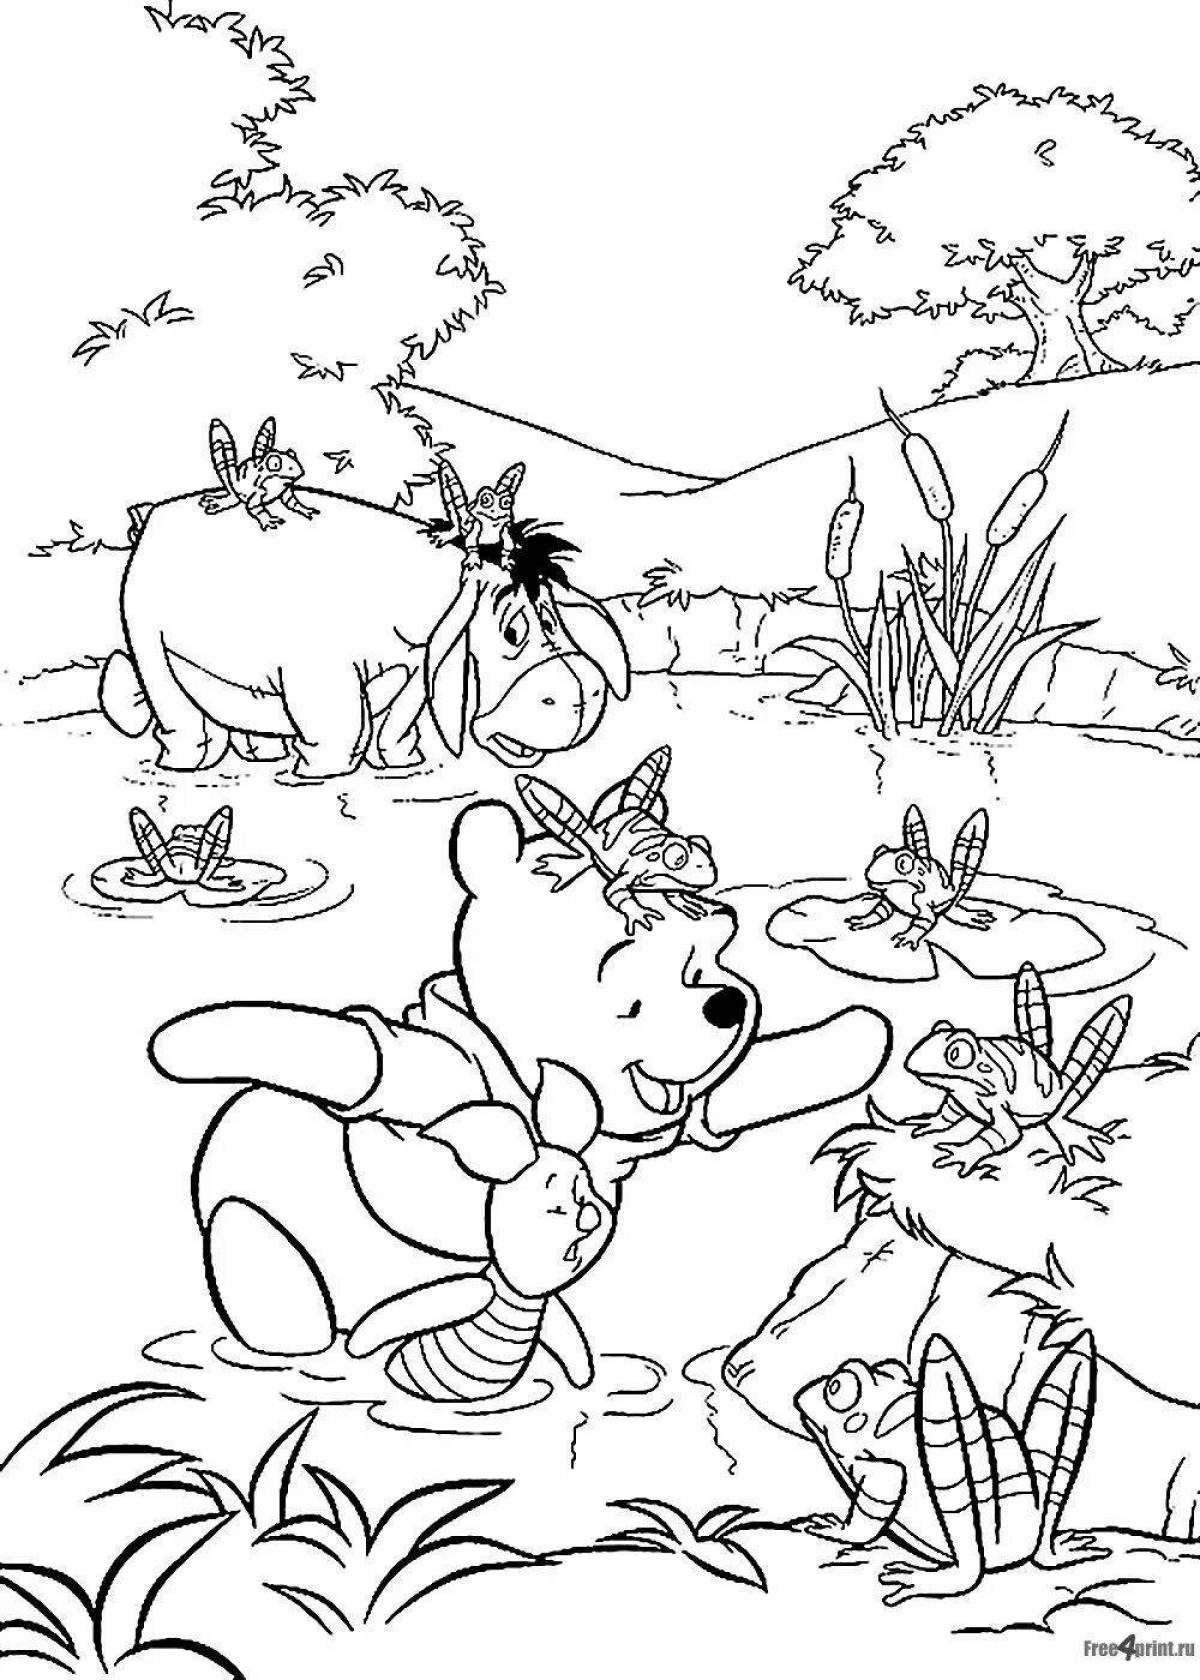 The cute winnie the pooh game